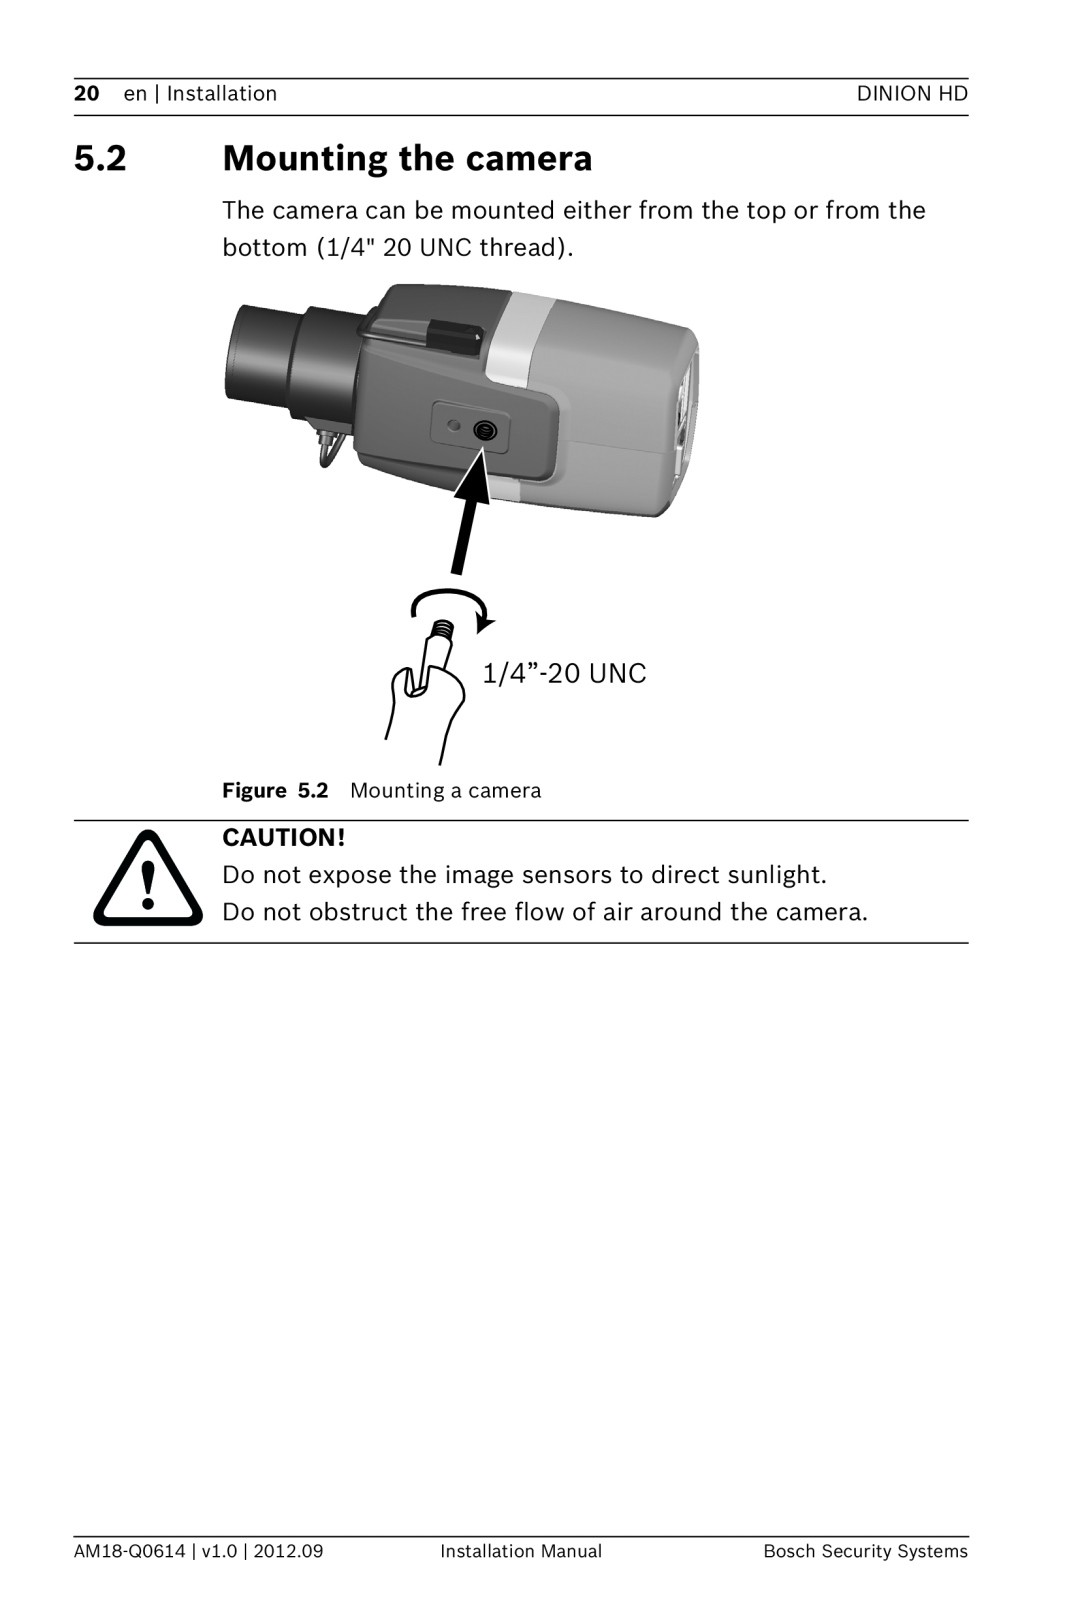 Bosch Appliances NBN-733 installation manual 5.2Mounting the camera, 1/4”-20UNC 